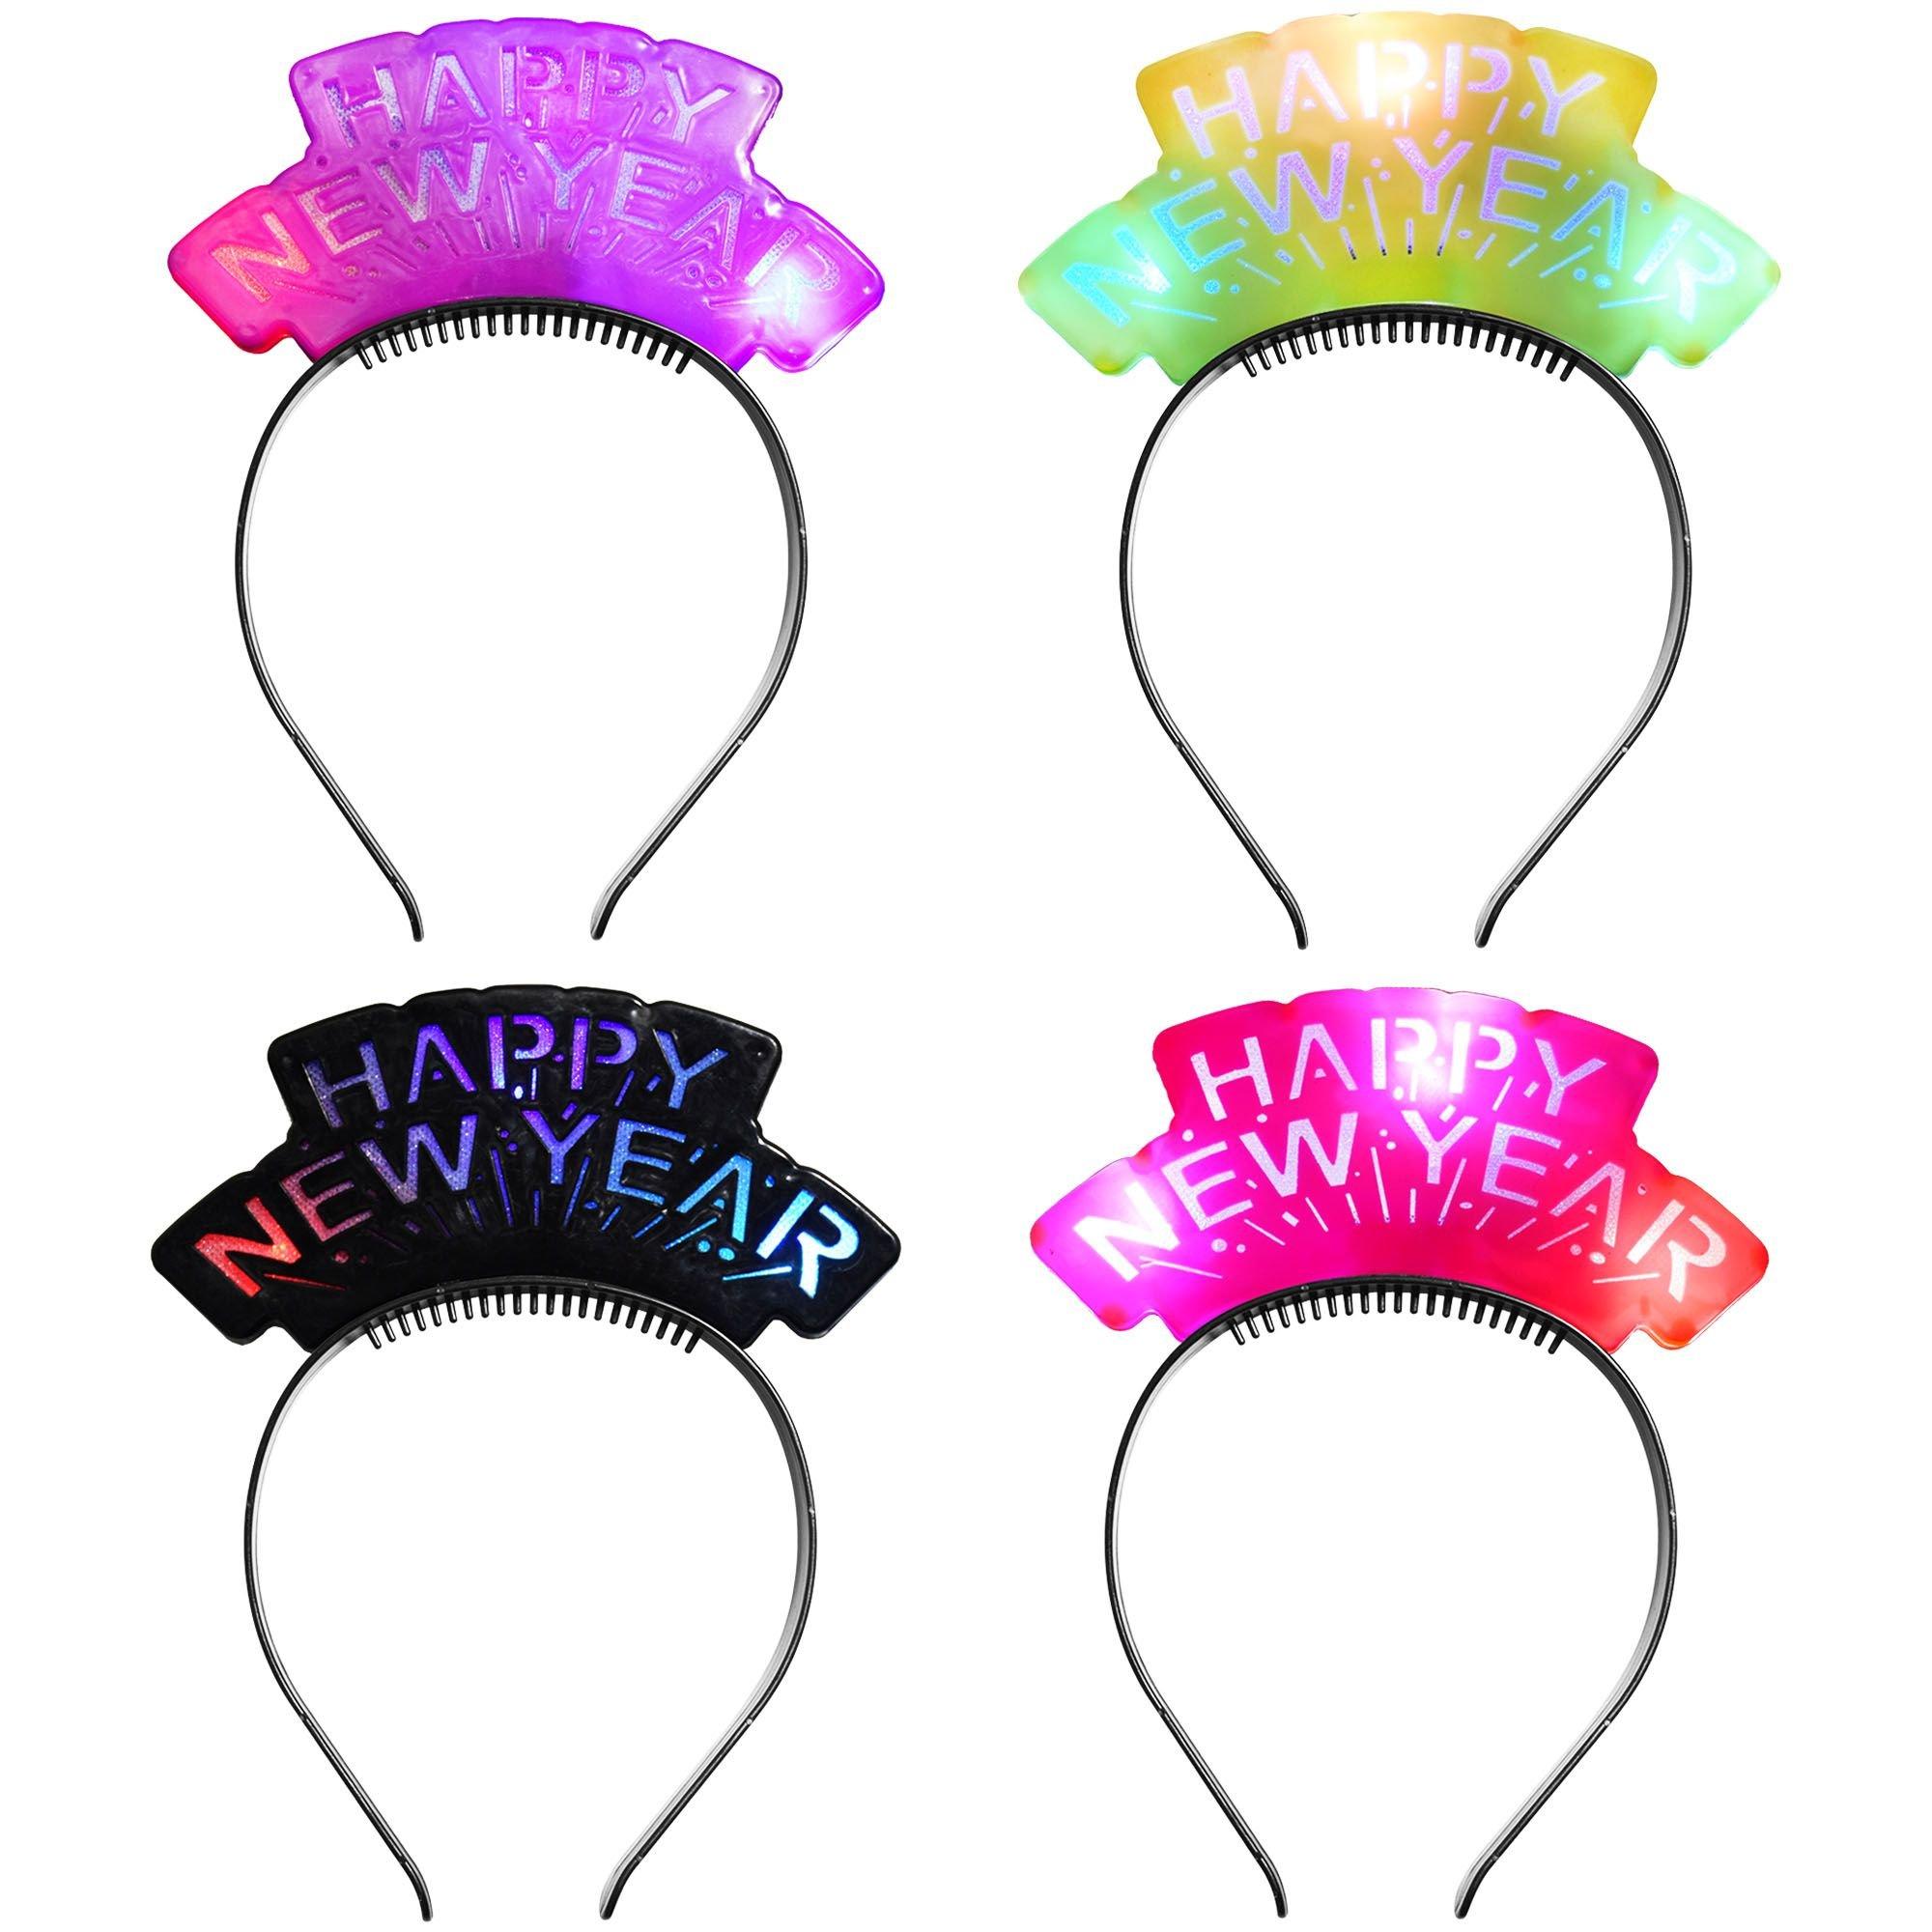 Gentagen Urter hardware Light-Up Flashy New Year's Eve Headband | Party City